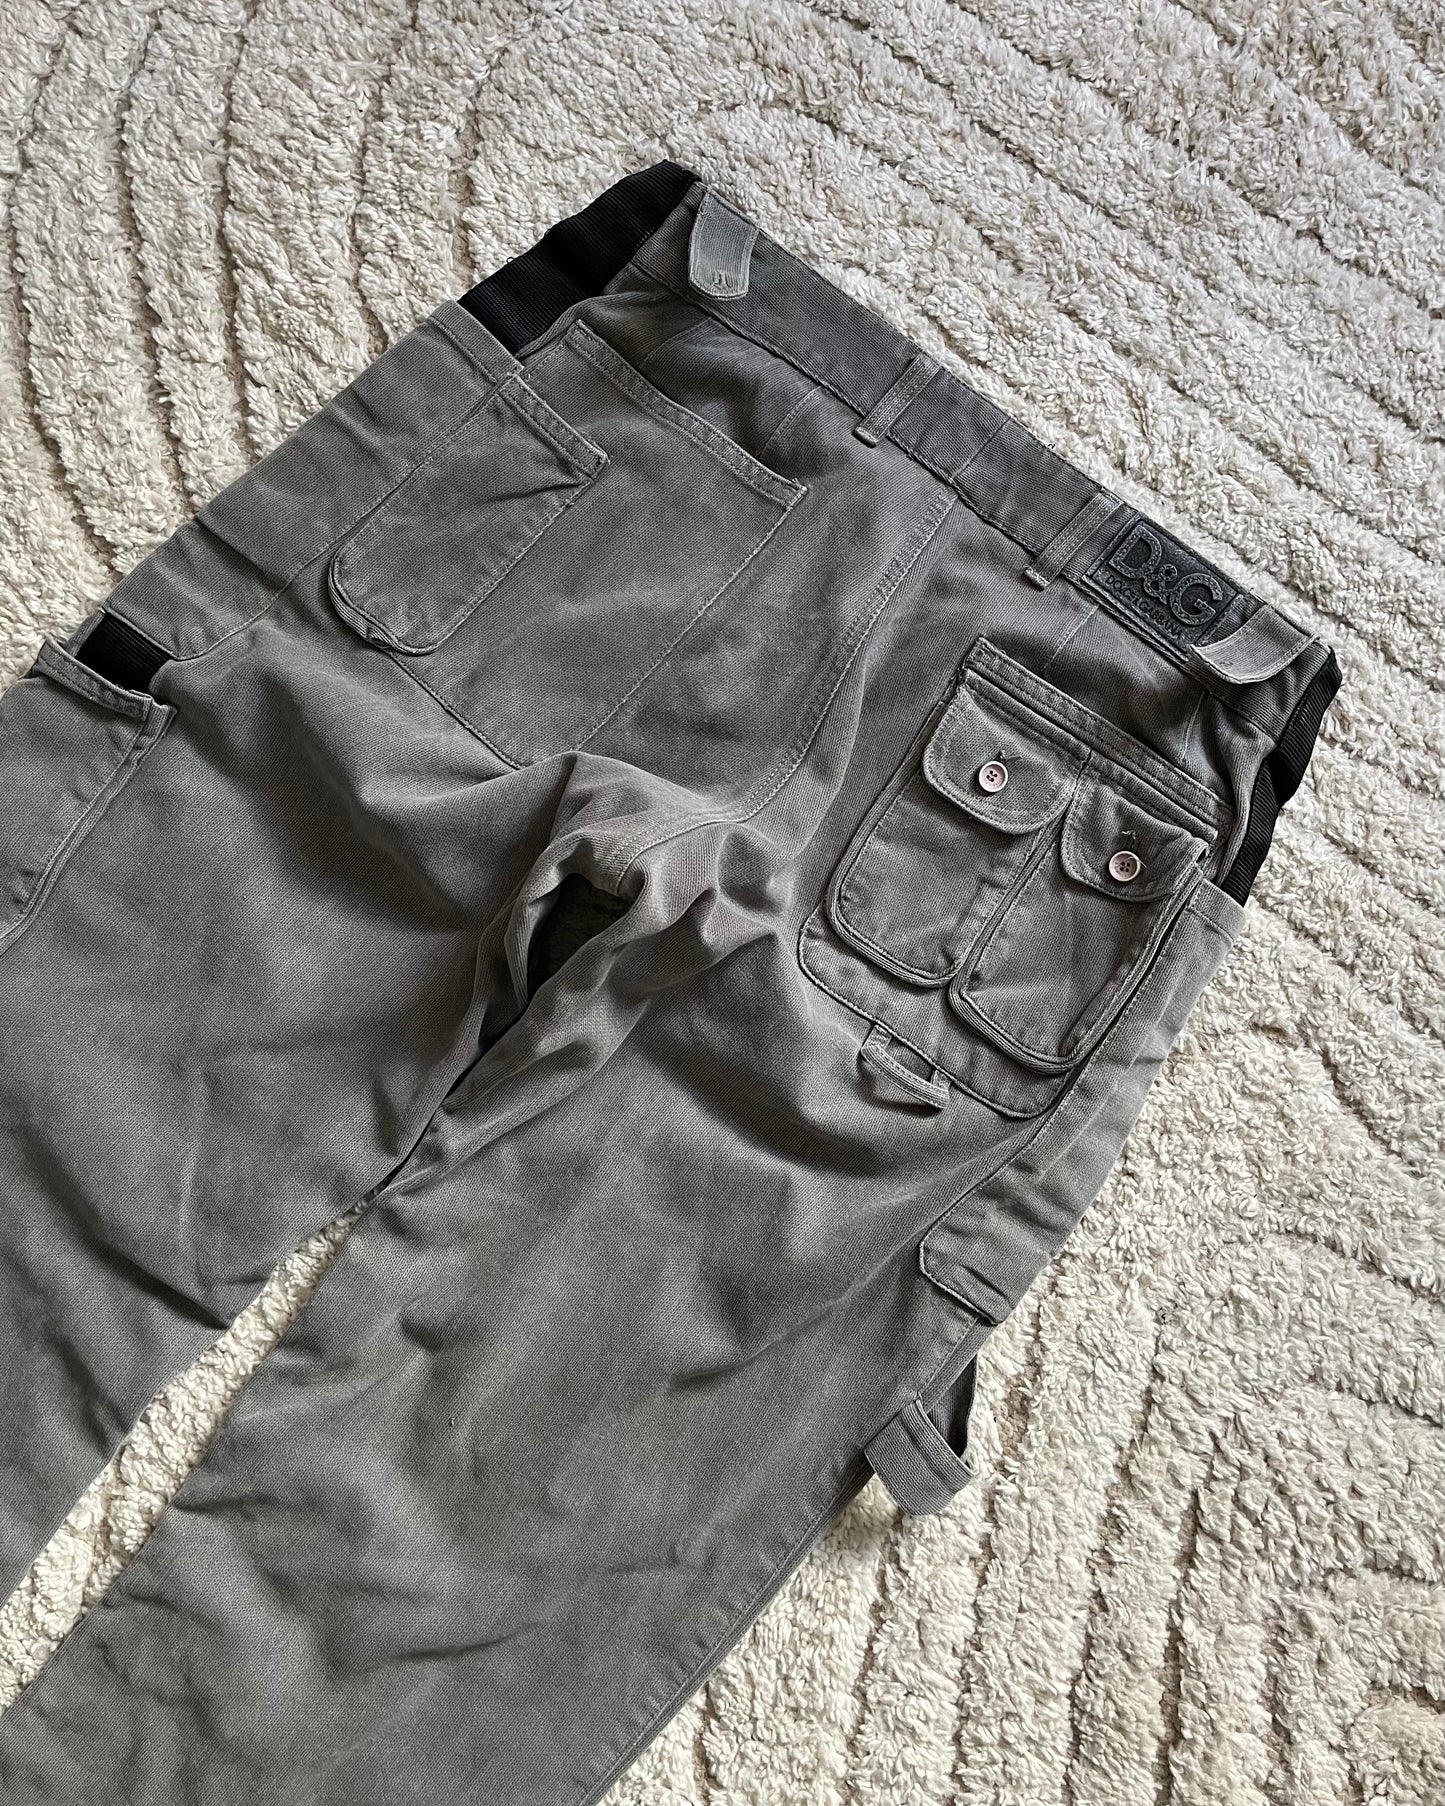 00s Dolce & Gabbana Defender Cargo Pants (M/L)